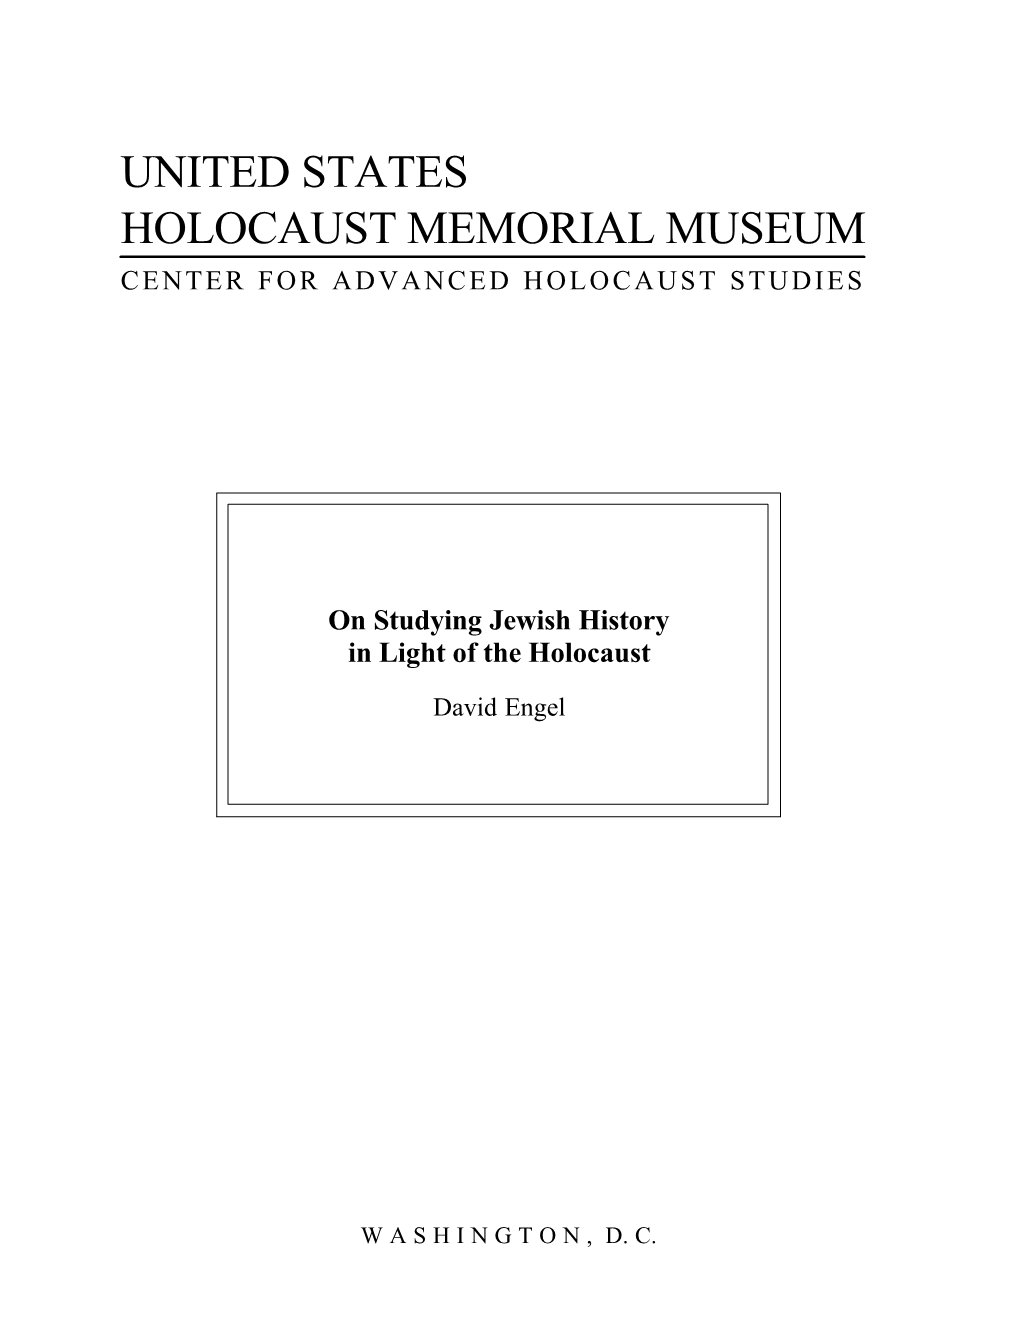 United States Holocaust Memorial Museum Center for Advanced Holocaust Studies